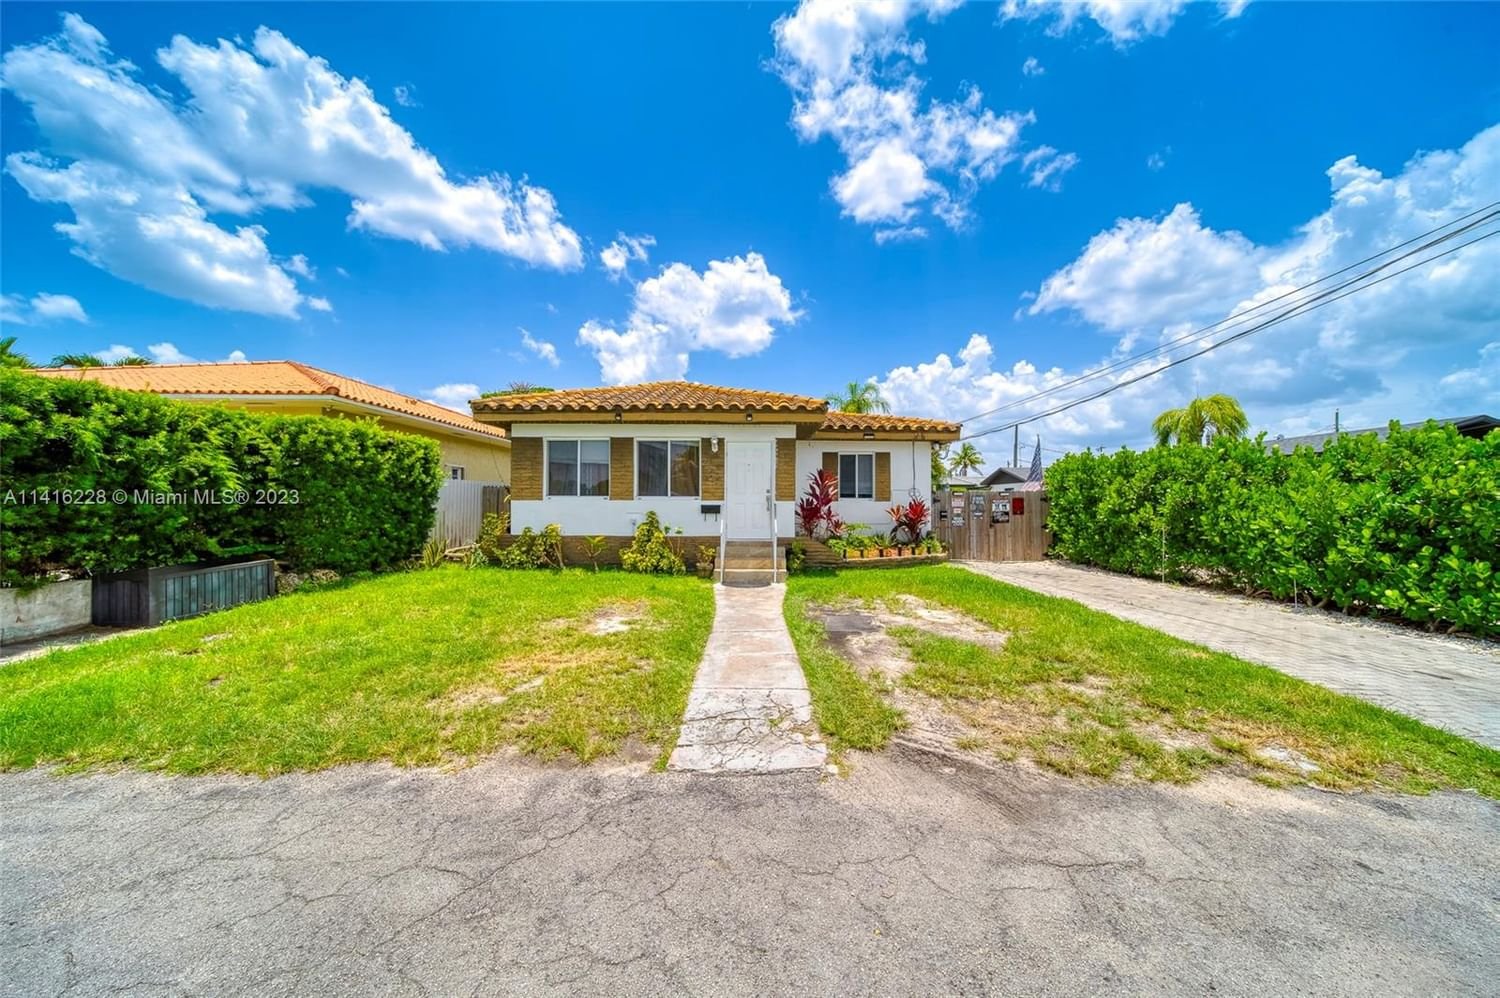 Real estate property located at 2720 65th Ave, Miami-Dade County, Miami, FL